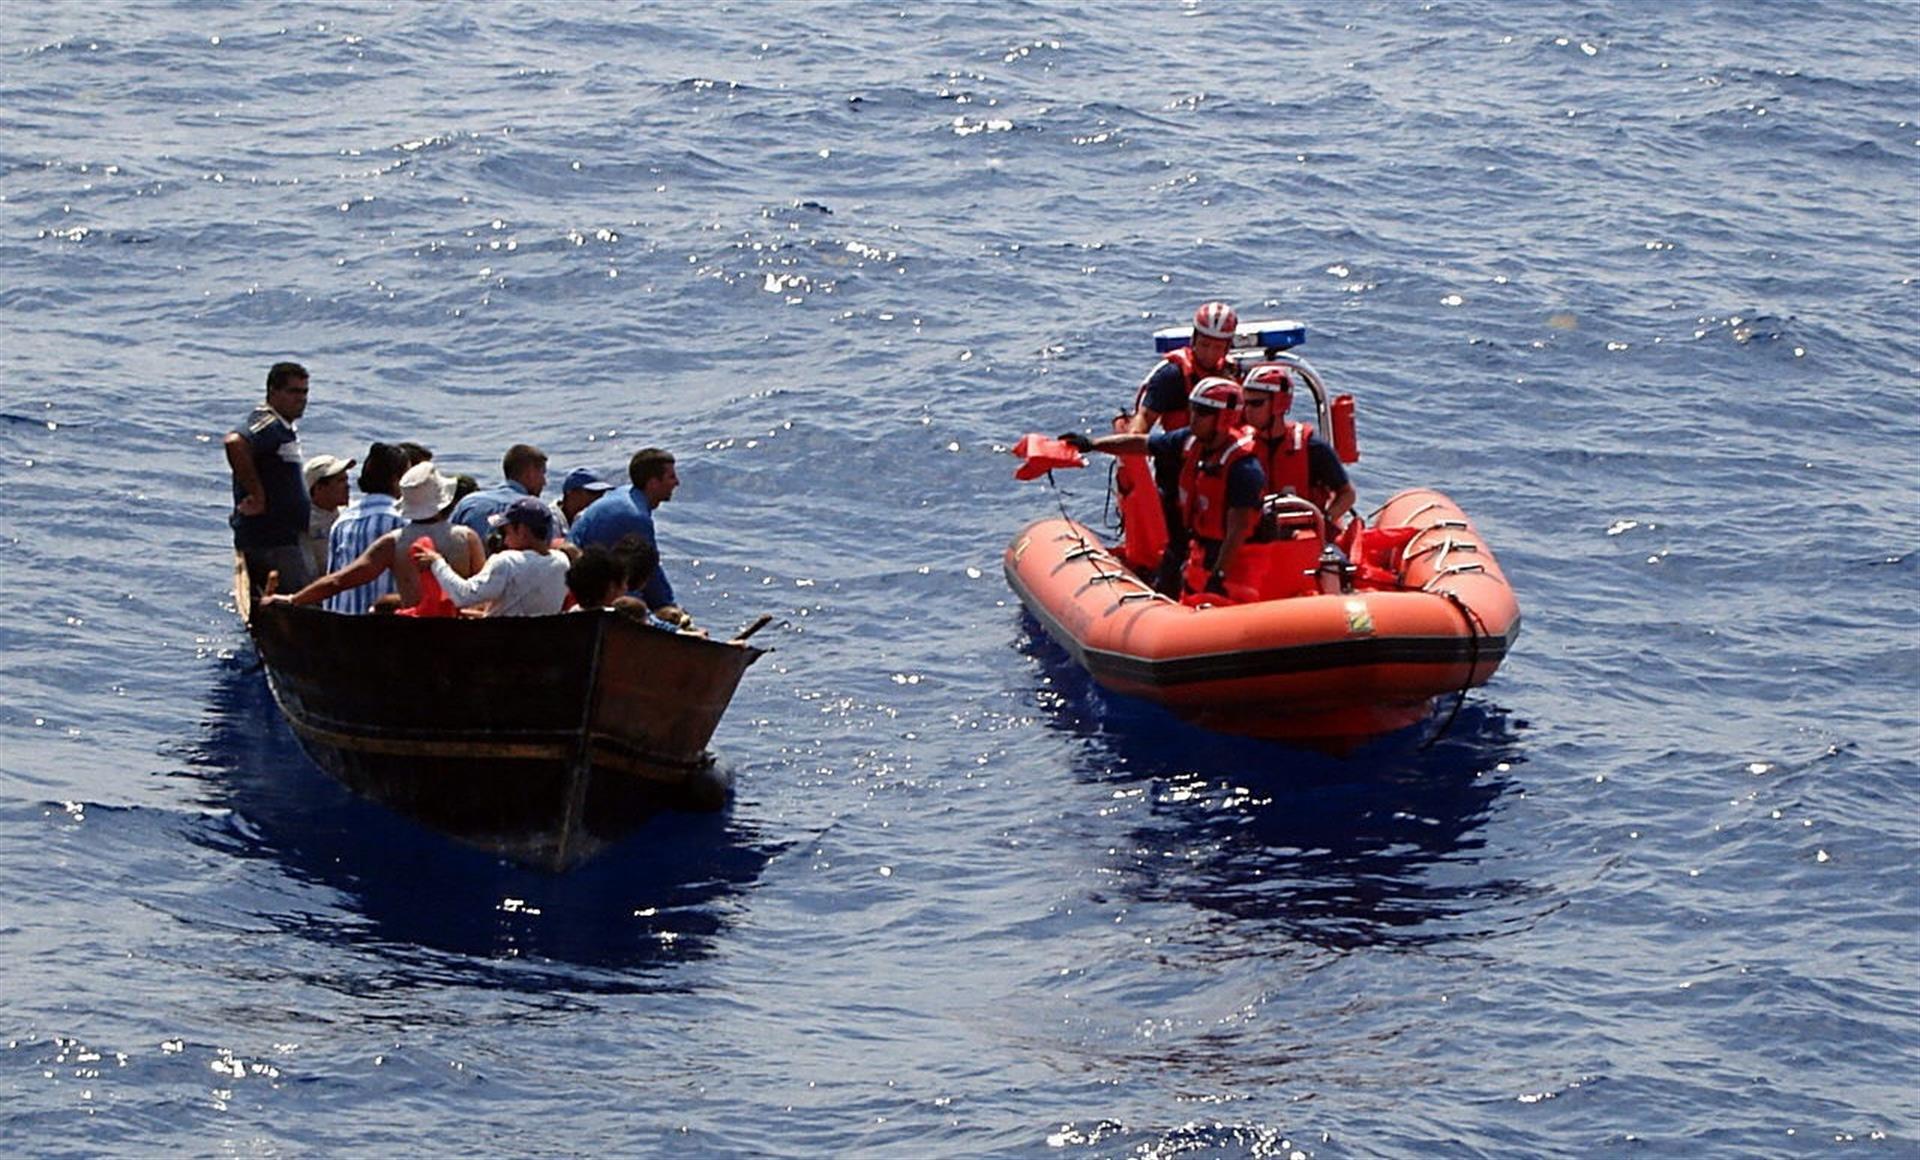 embarcacion cubanos guardia costera eeuu